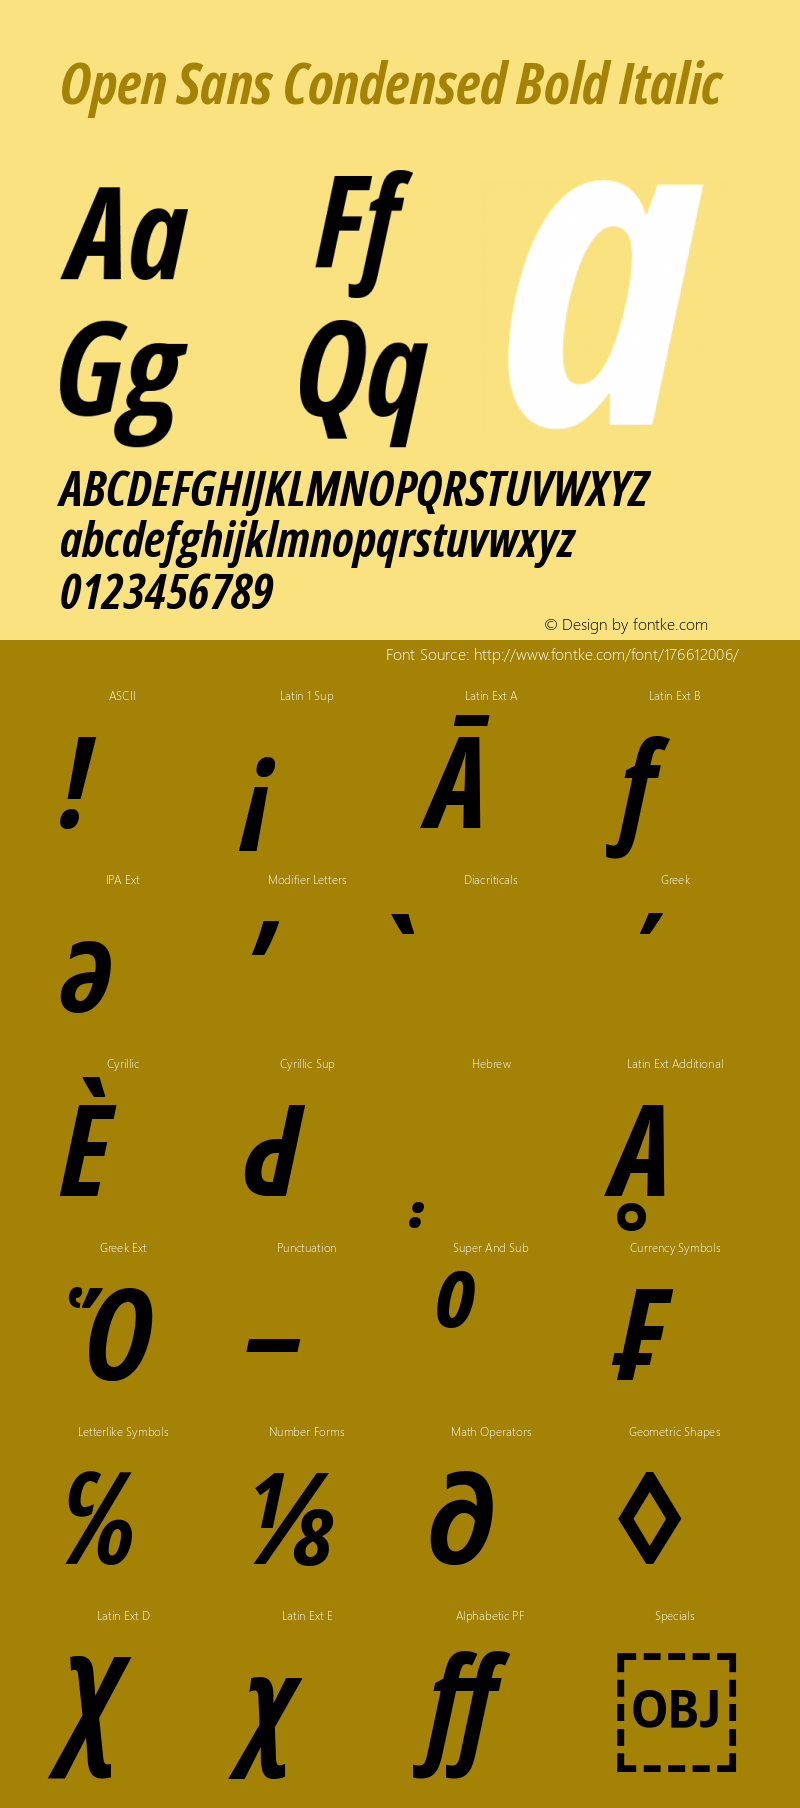 Open Sans Condensed Bold Italic Version 3.000; ttfautohint (v1.8.3)图片样张